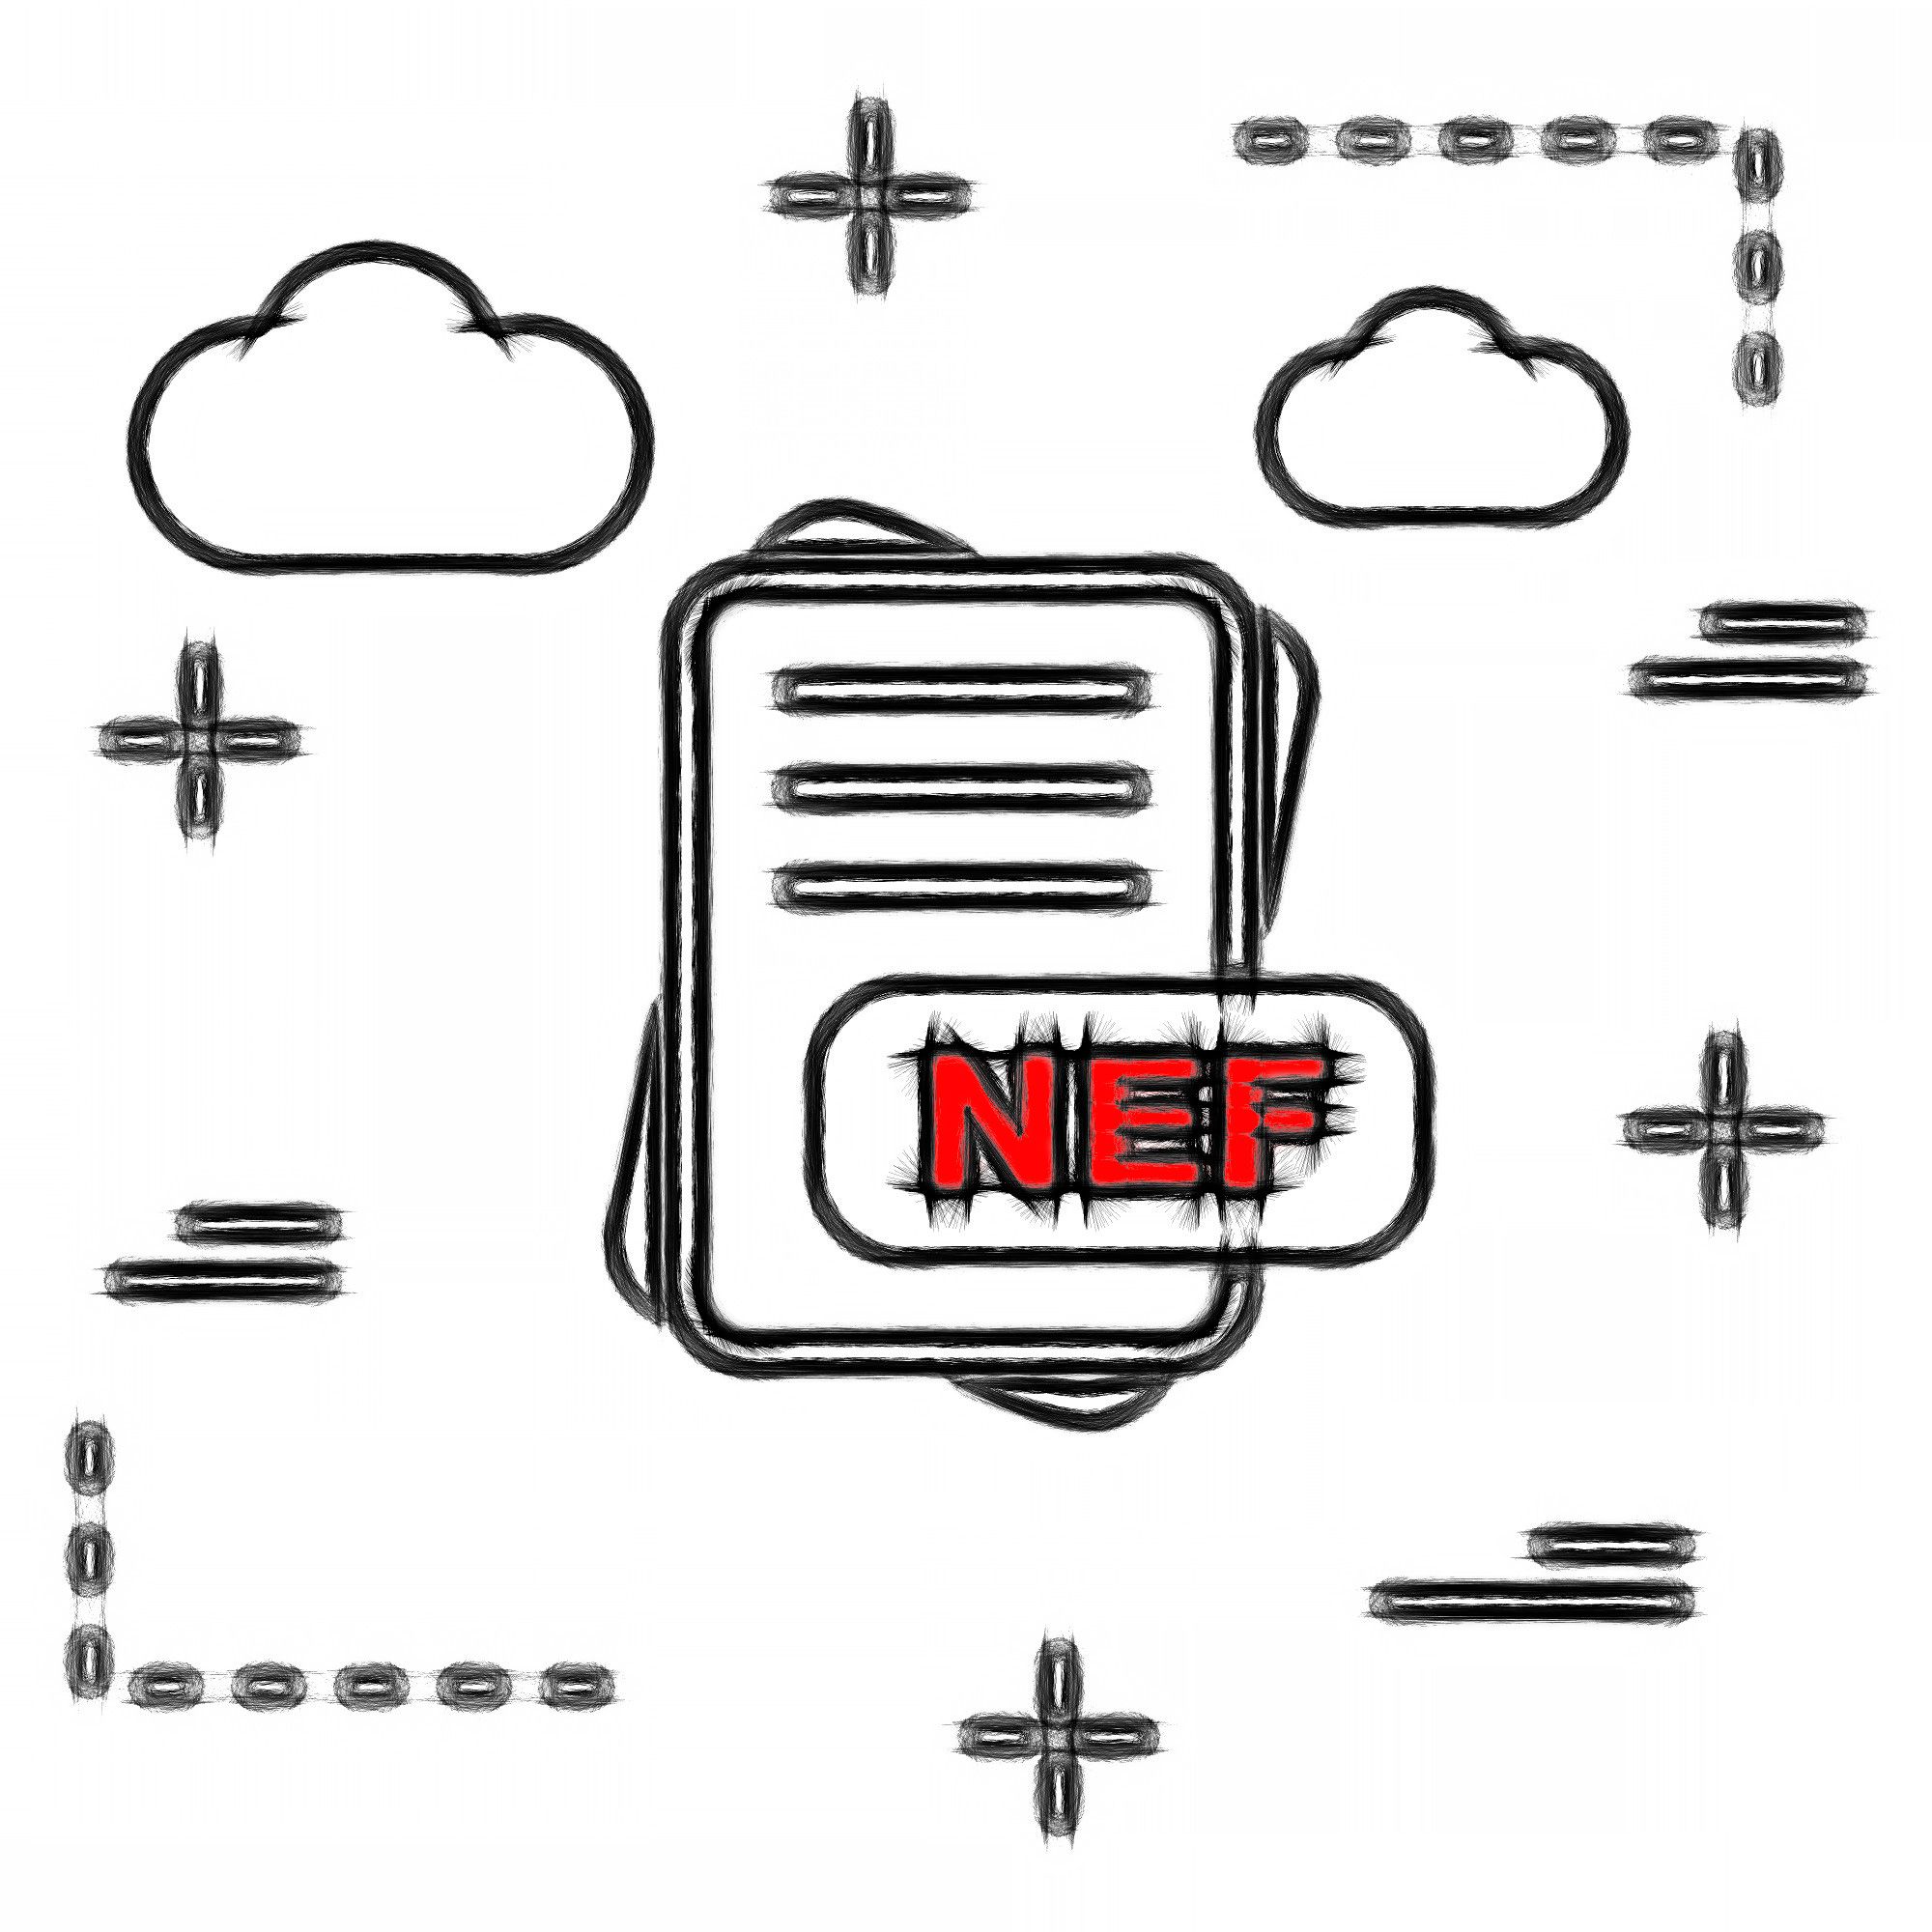 NEF-Dateiformat..